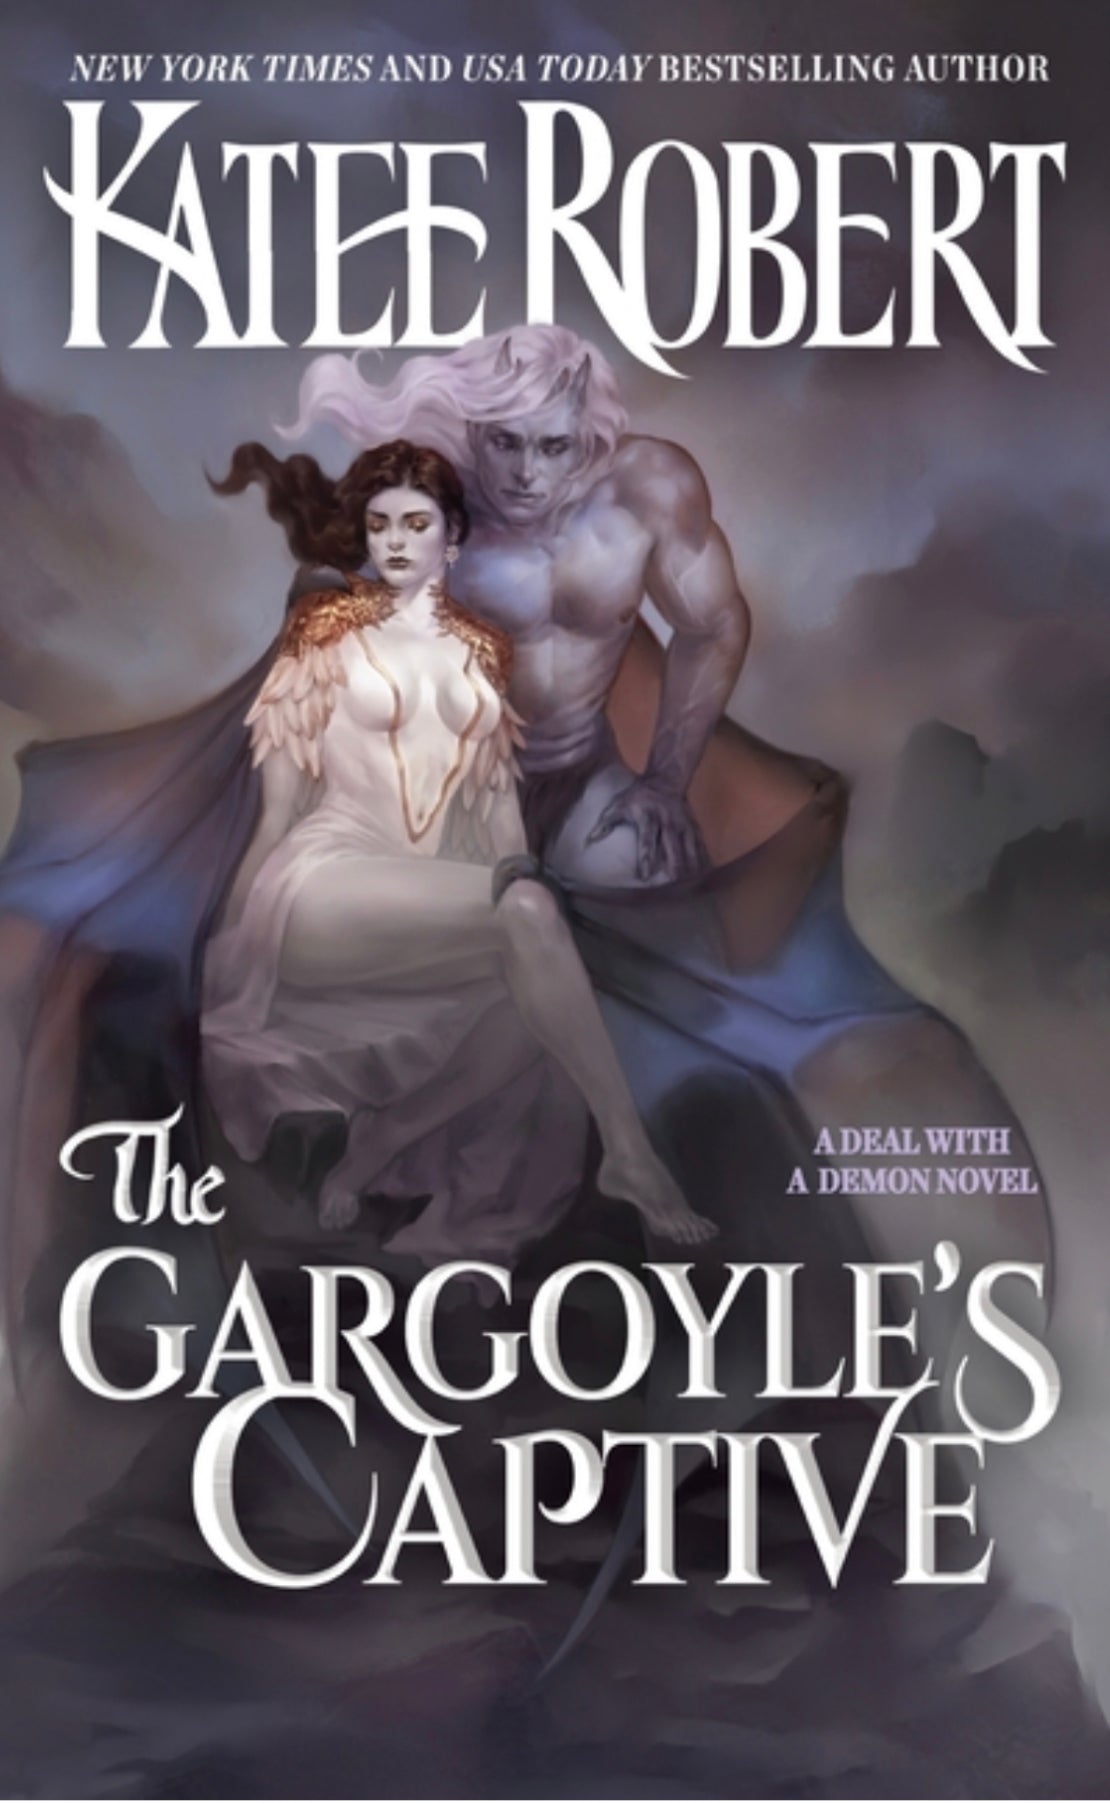 The Gargoyle’s Captive